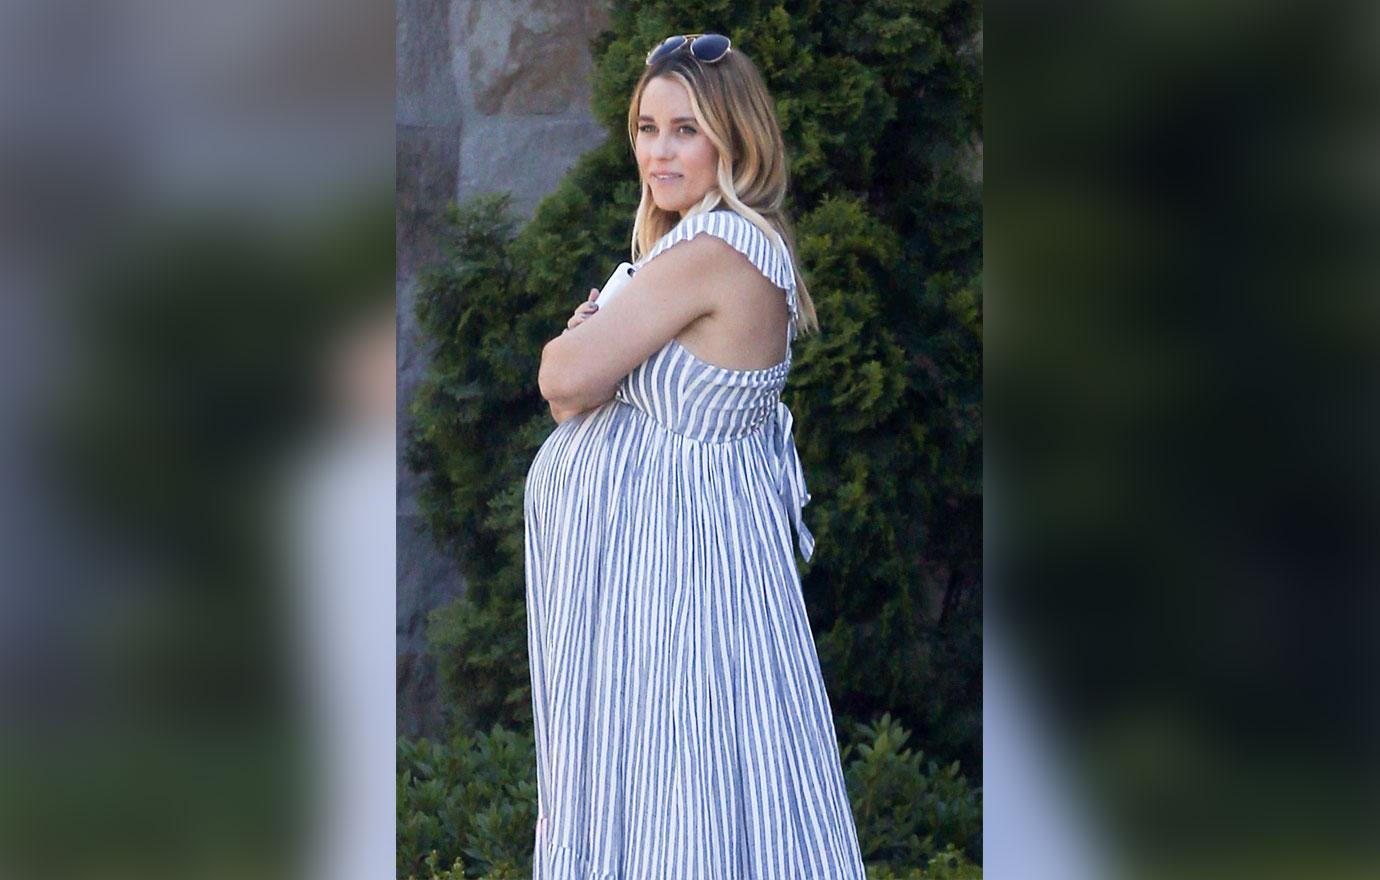 Lauren Conrad Shows Off Her Growing Baby Bump at Fashion Event: Photo  3852791, Lauren Conrad, Pregnant Photos